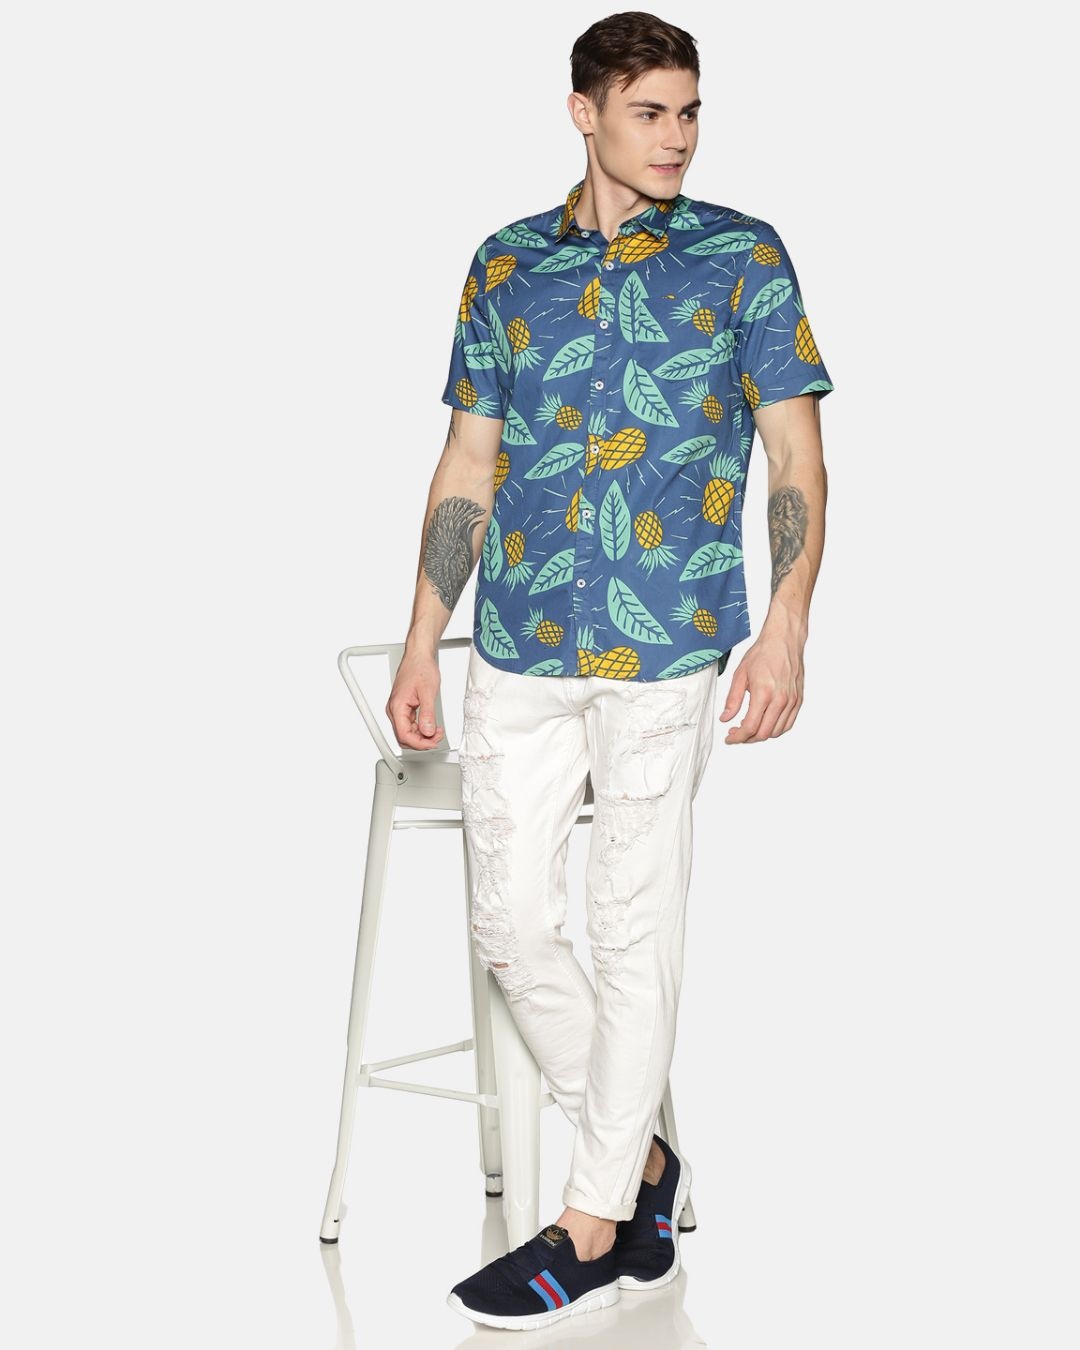 Shop Men Short Sleeve Cotton Printed Blue Yellow Pineapple Shirt